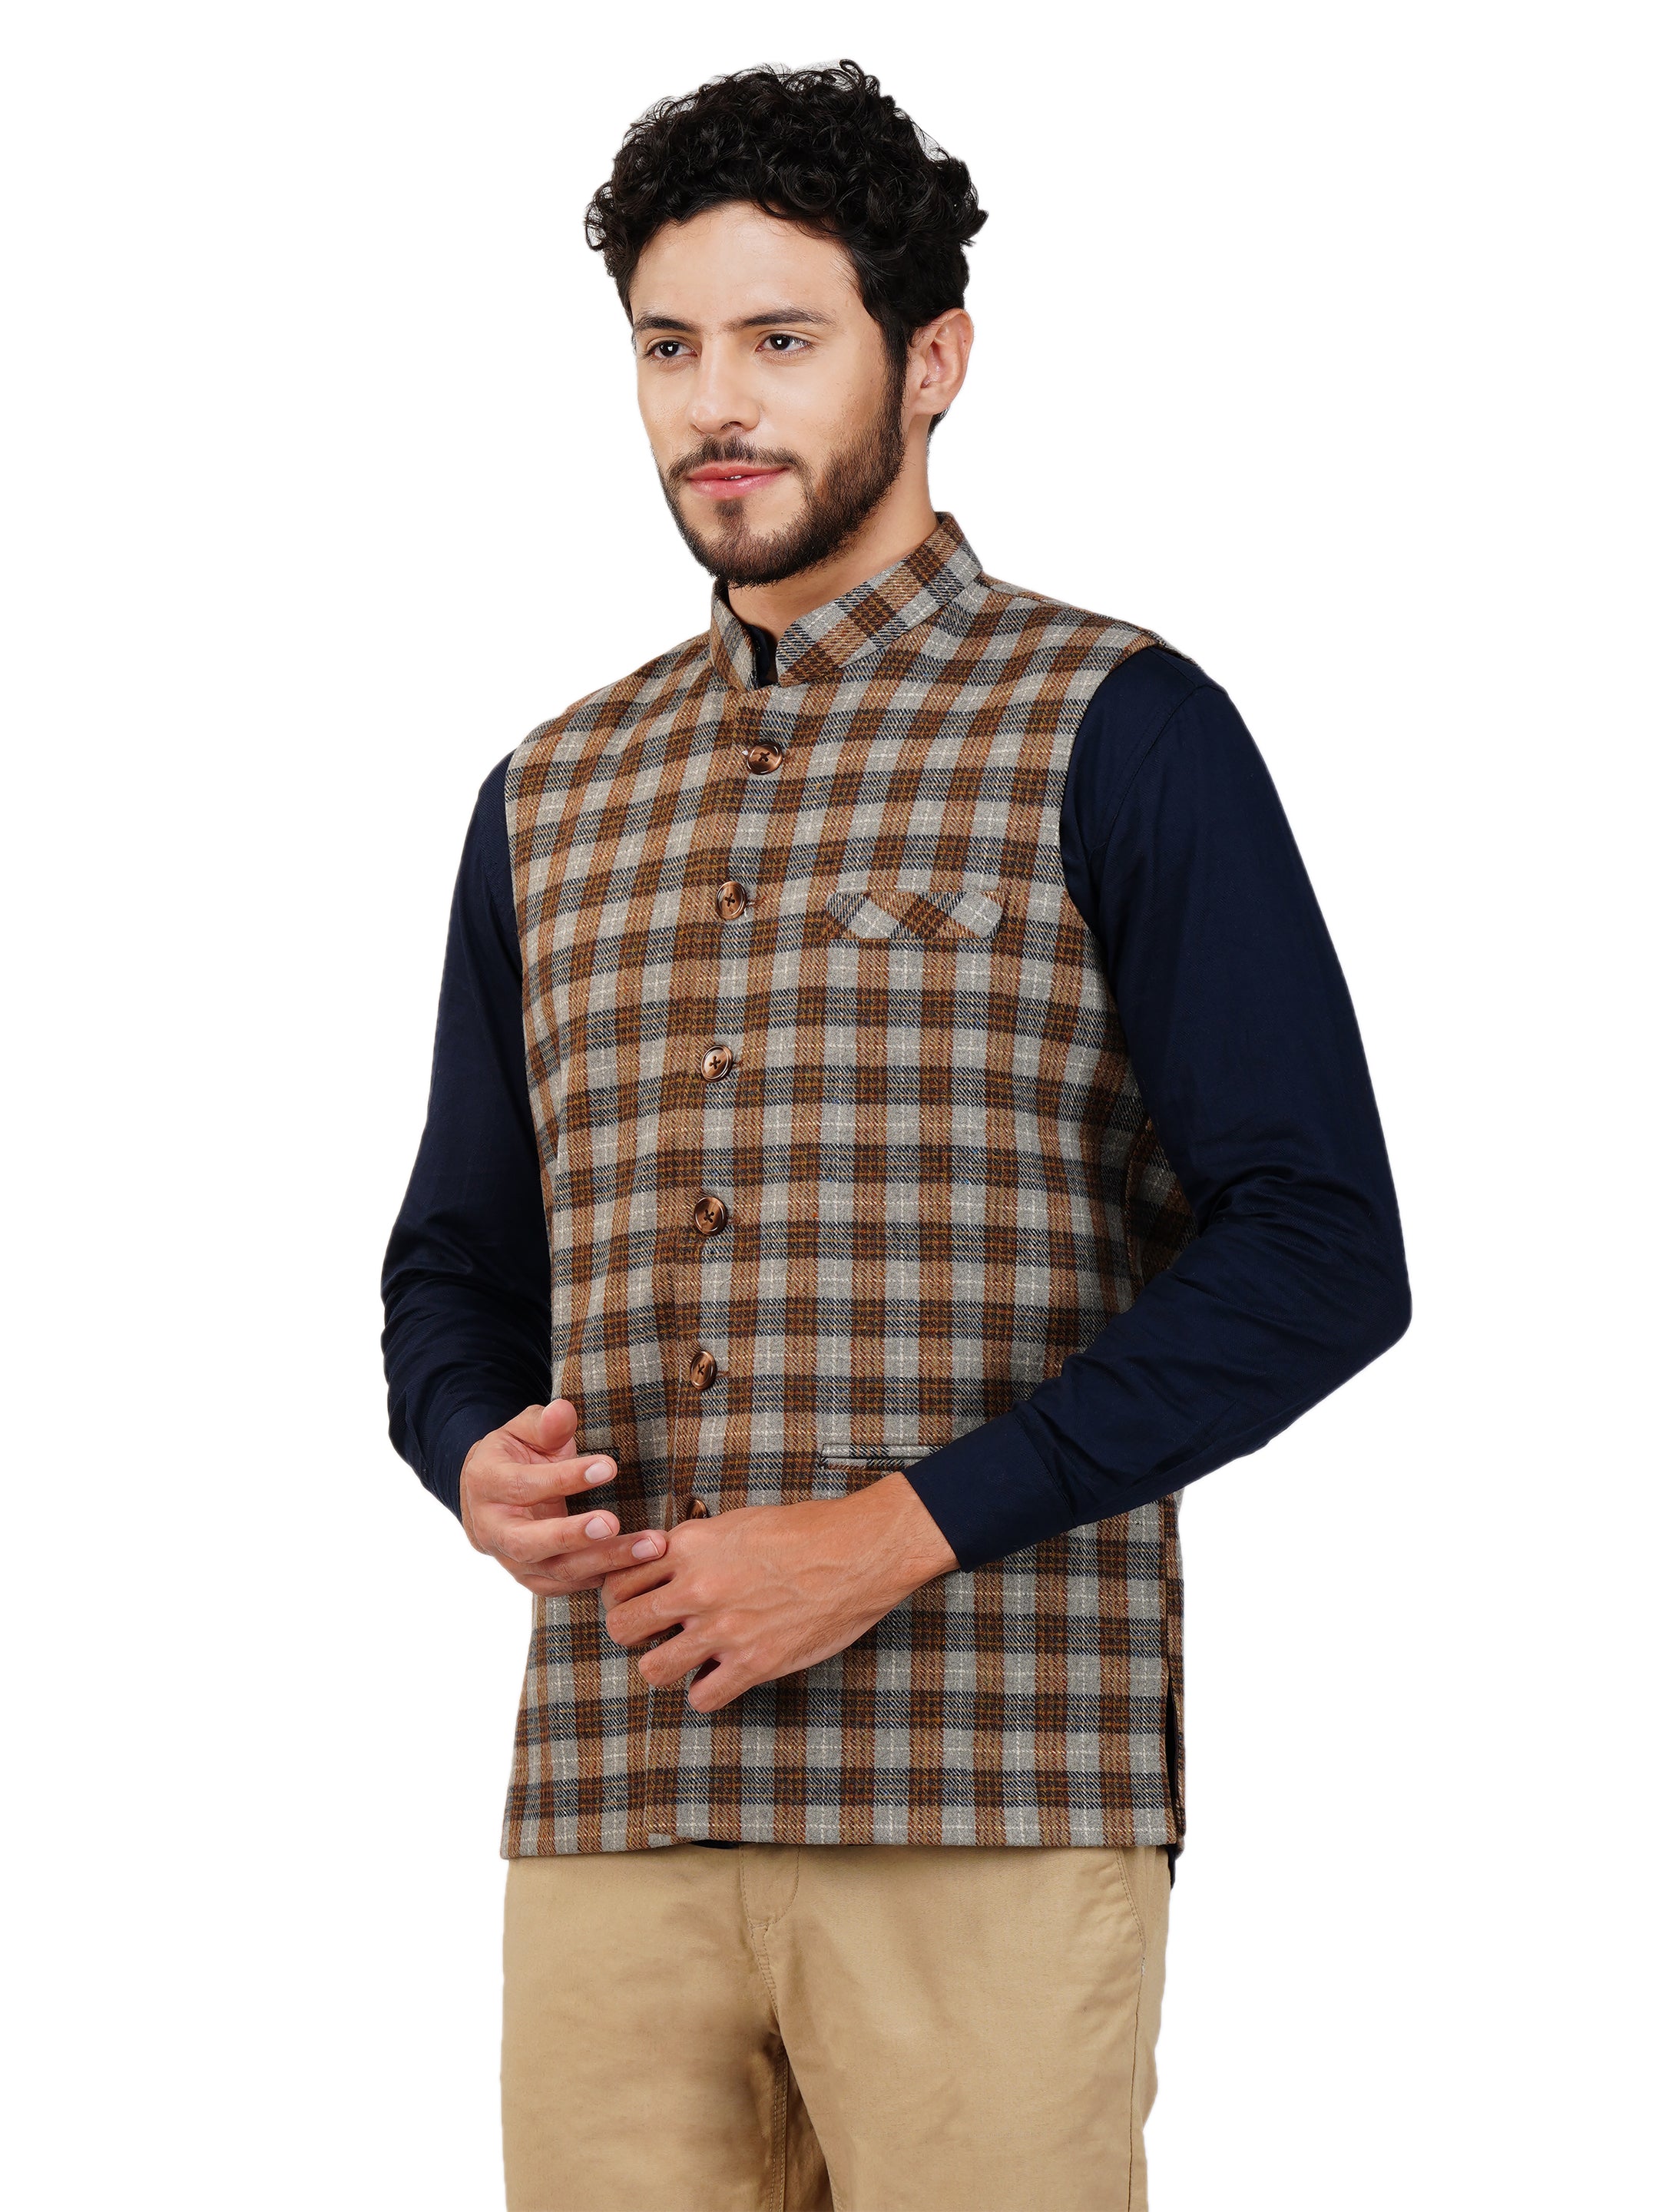 fcity.in - Men Ethnic Jodhpuri Fancy Jacket / Stylish Men Ethnic Jackets